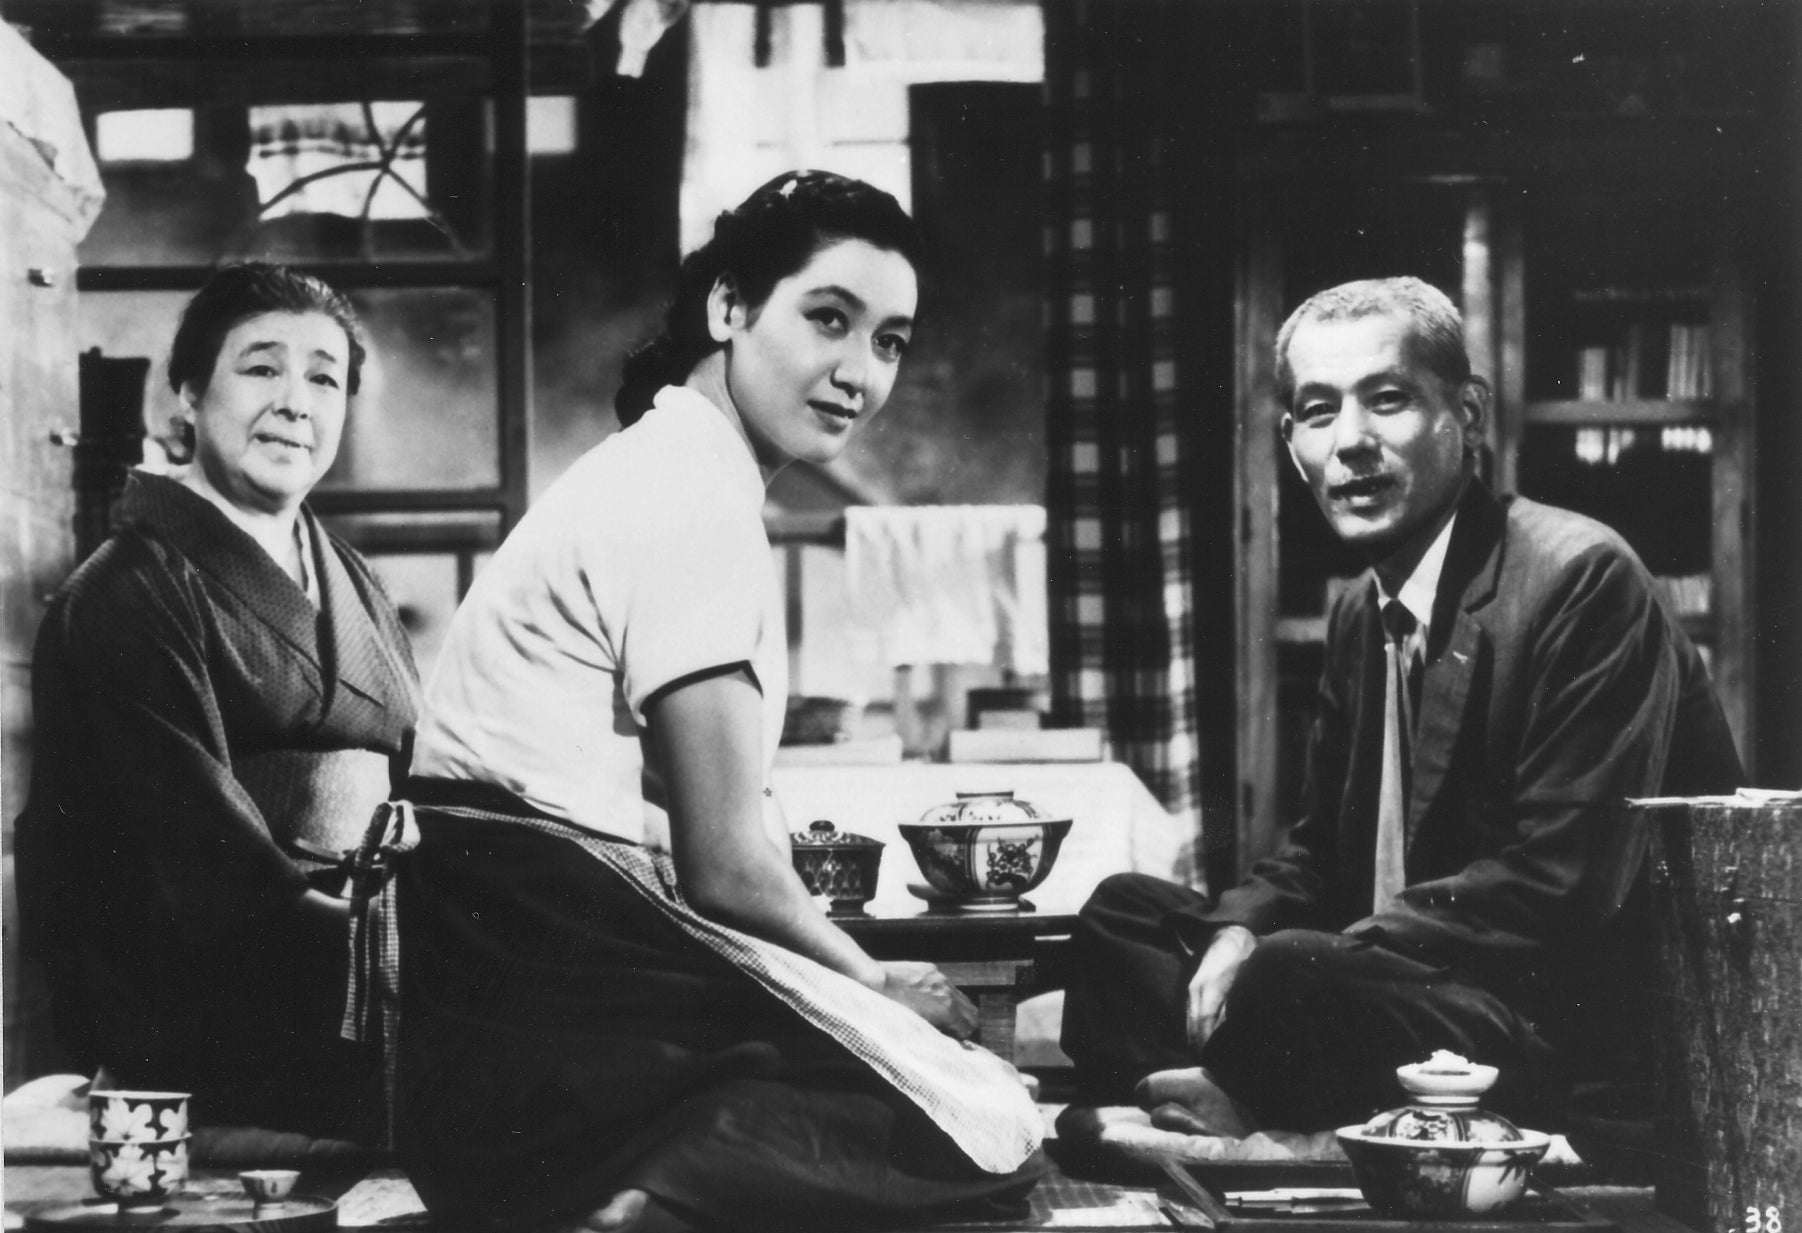 Voyage à Tokyo de Yasujiro Ozu - Carlotta Films - La Boutique